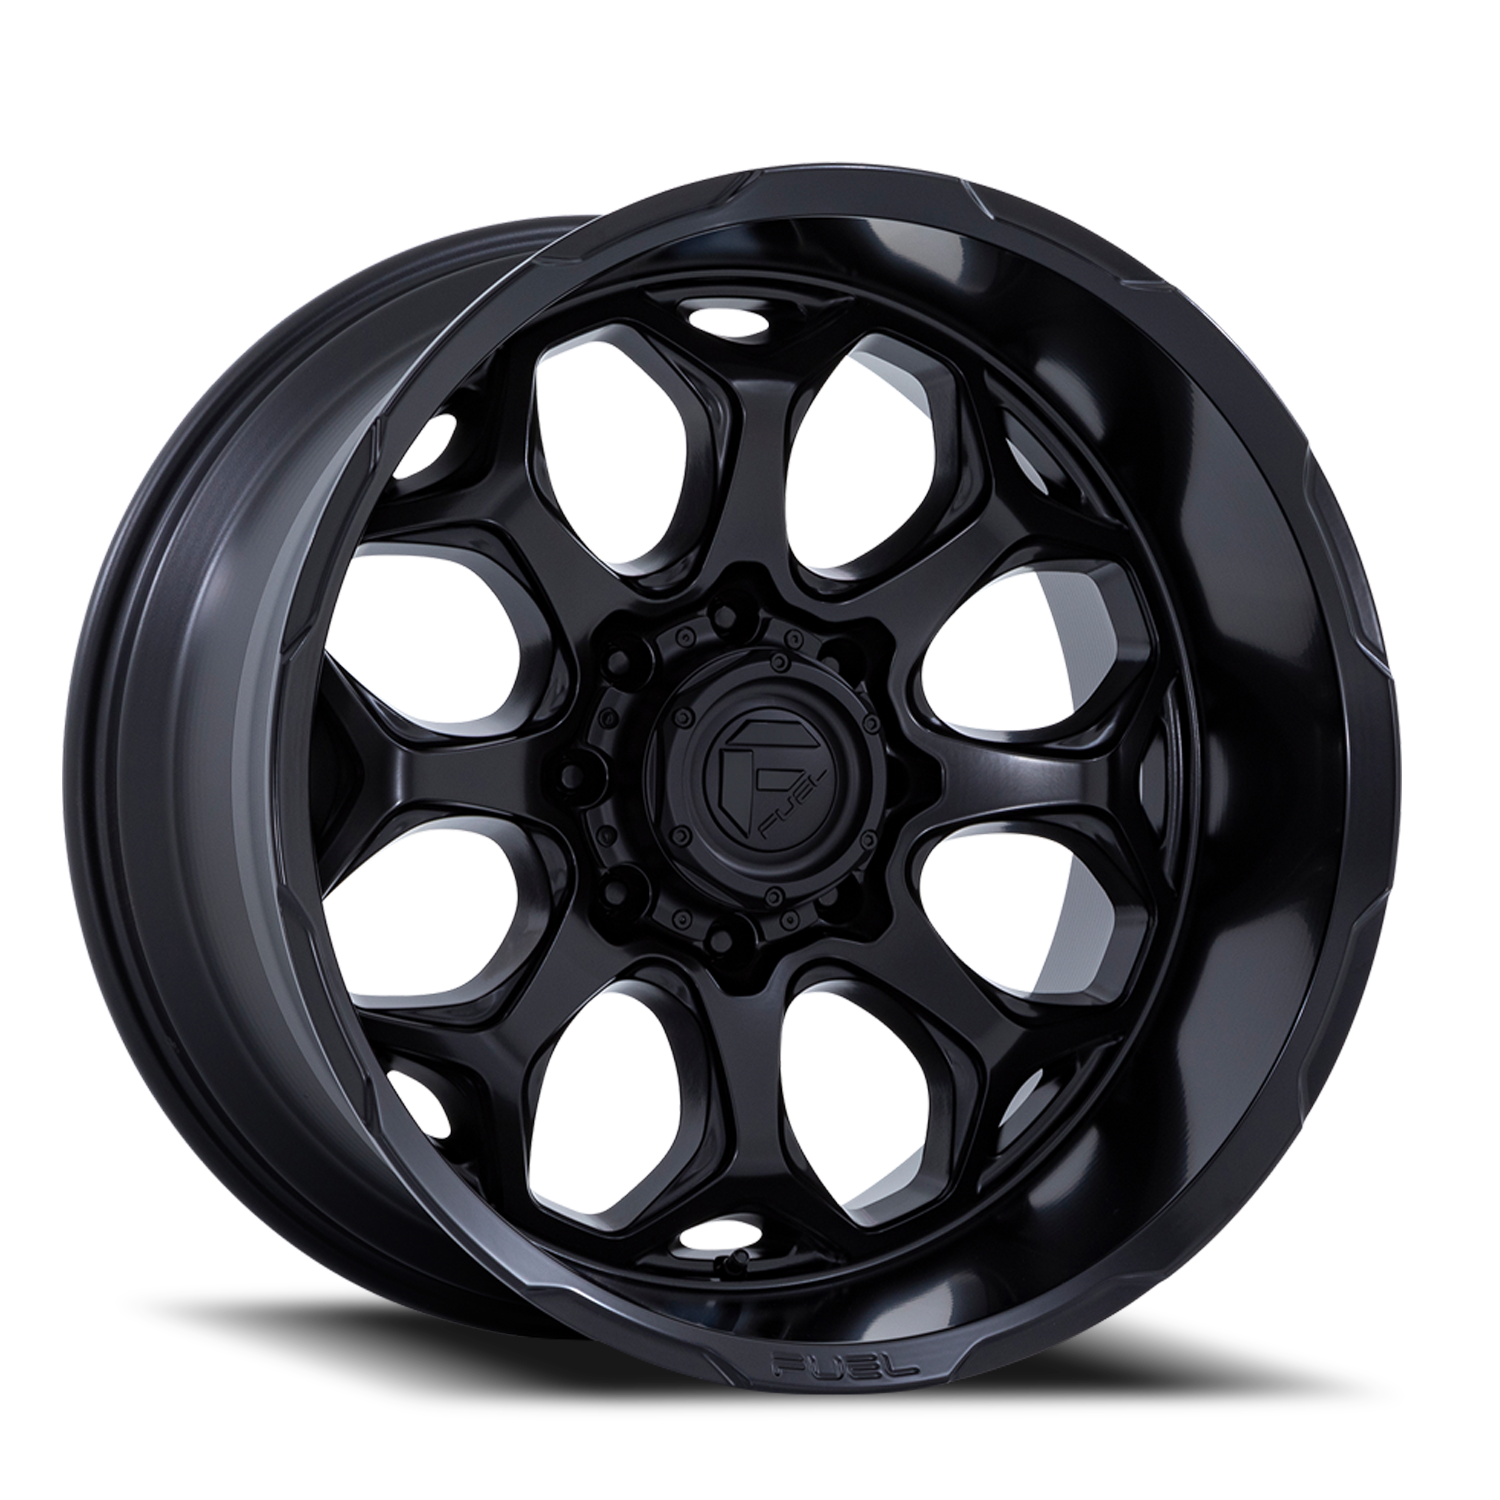 Aluminum Wheels 20X9 Scepter FC862 MX 6 On 135 Blackout 87.1 Bore 1 Offset Fuel Off Road Wheels